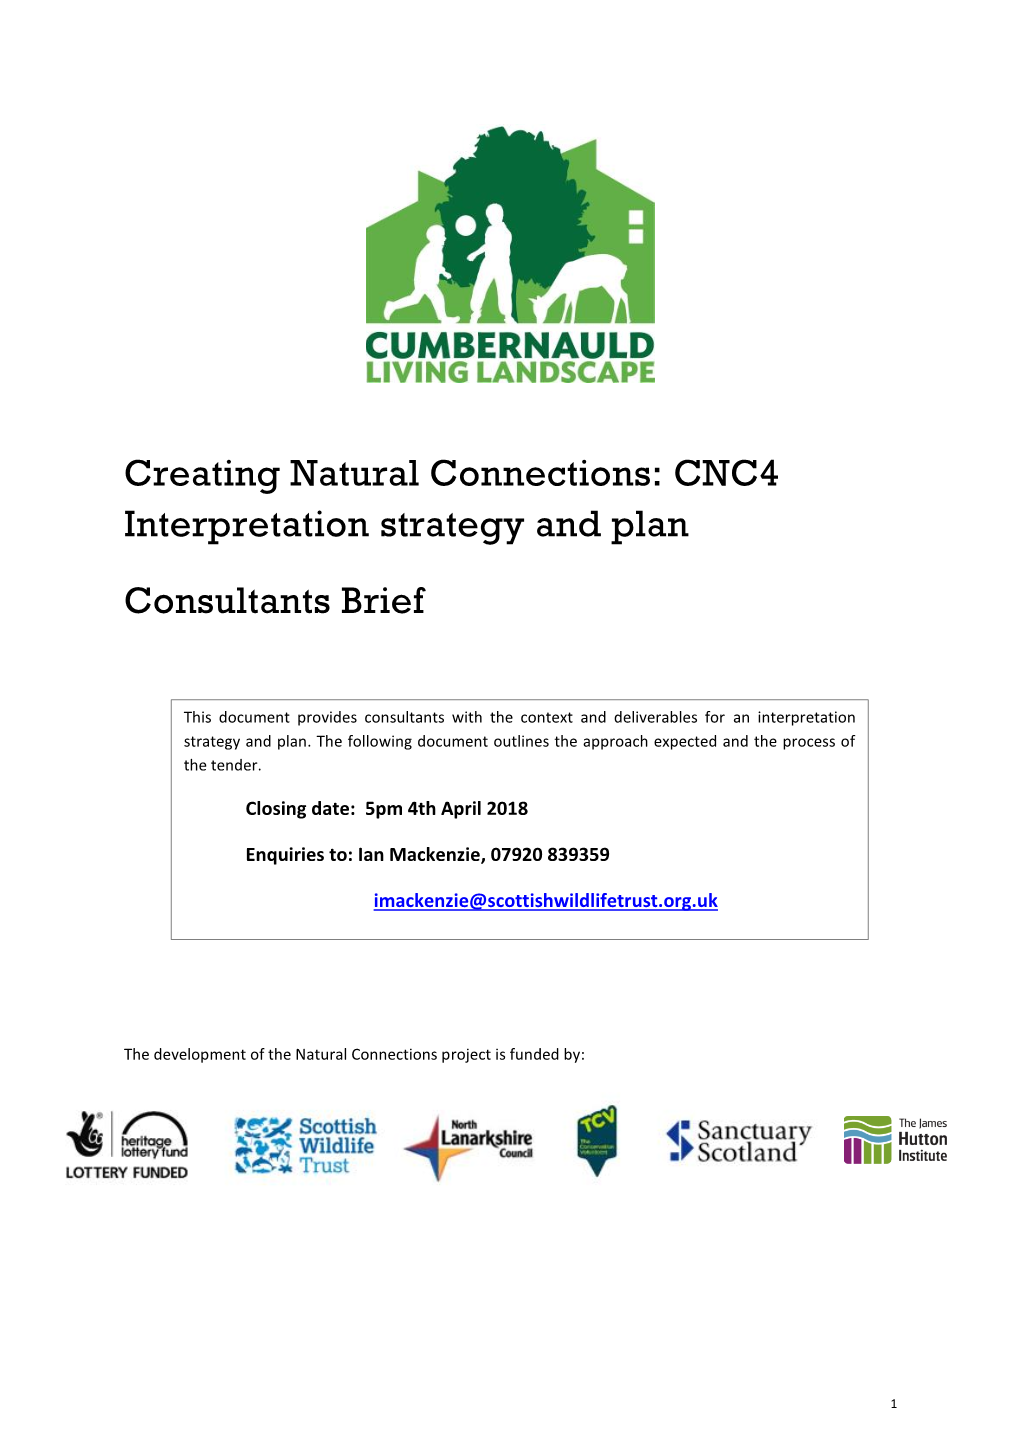 CNC4 Interpretation Strategy and Plan